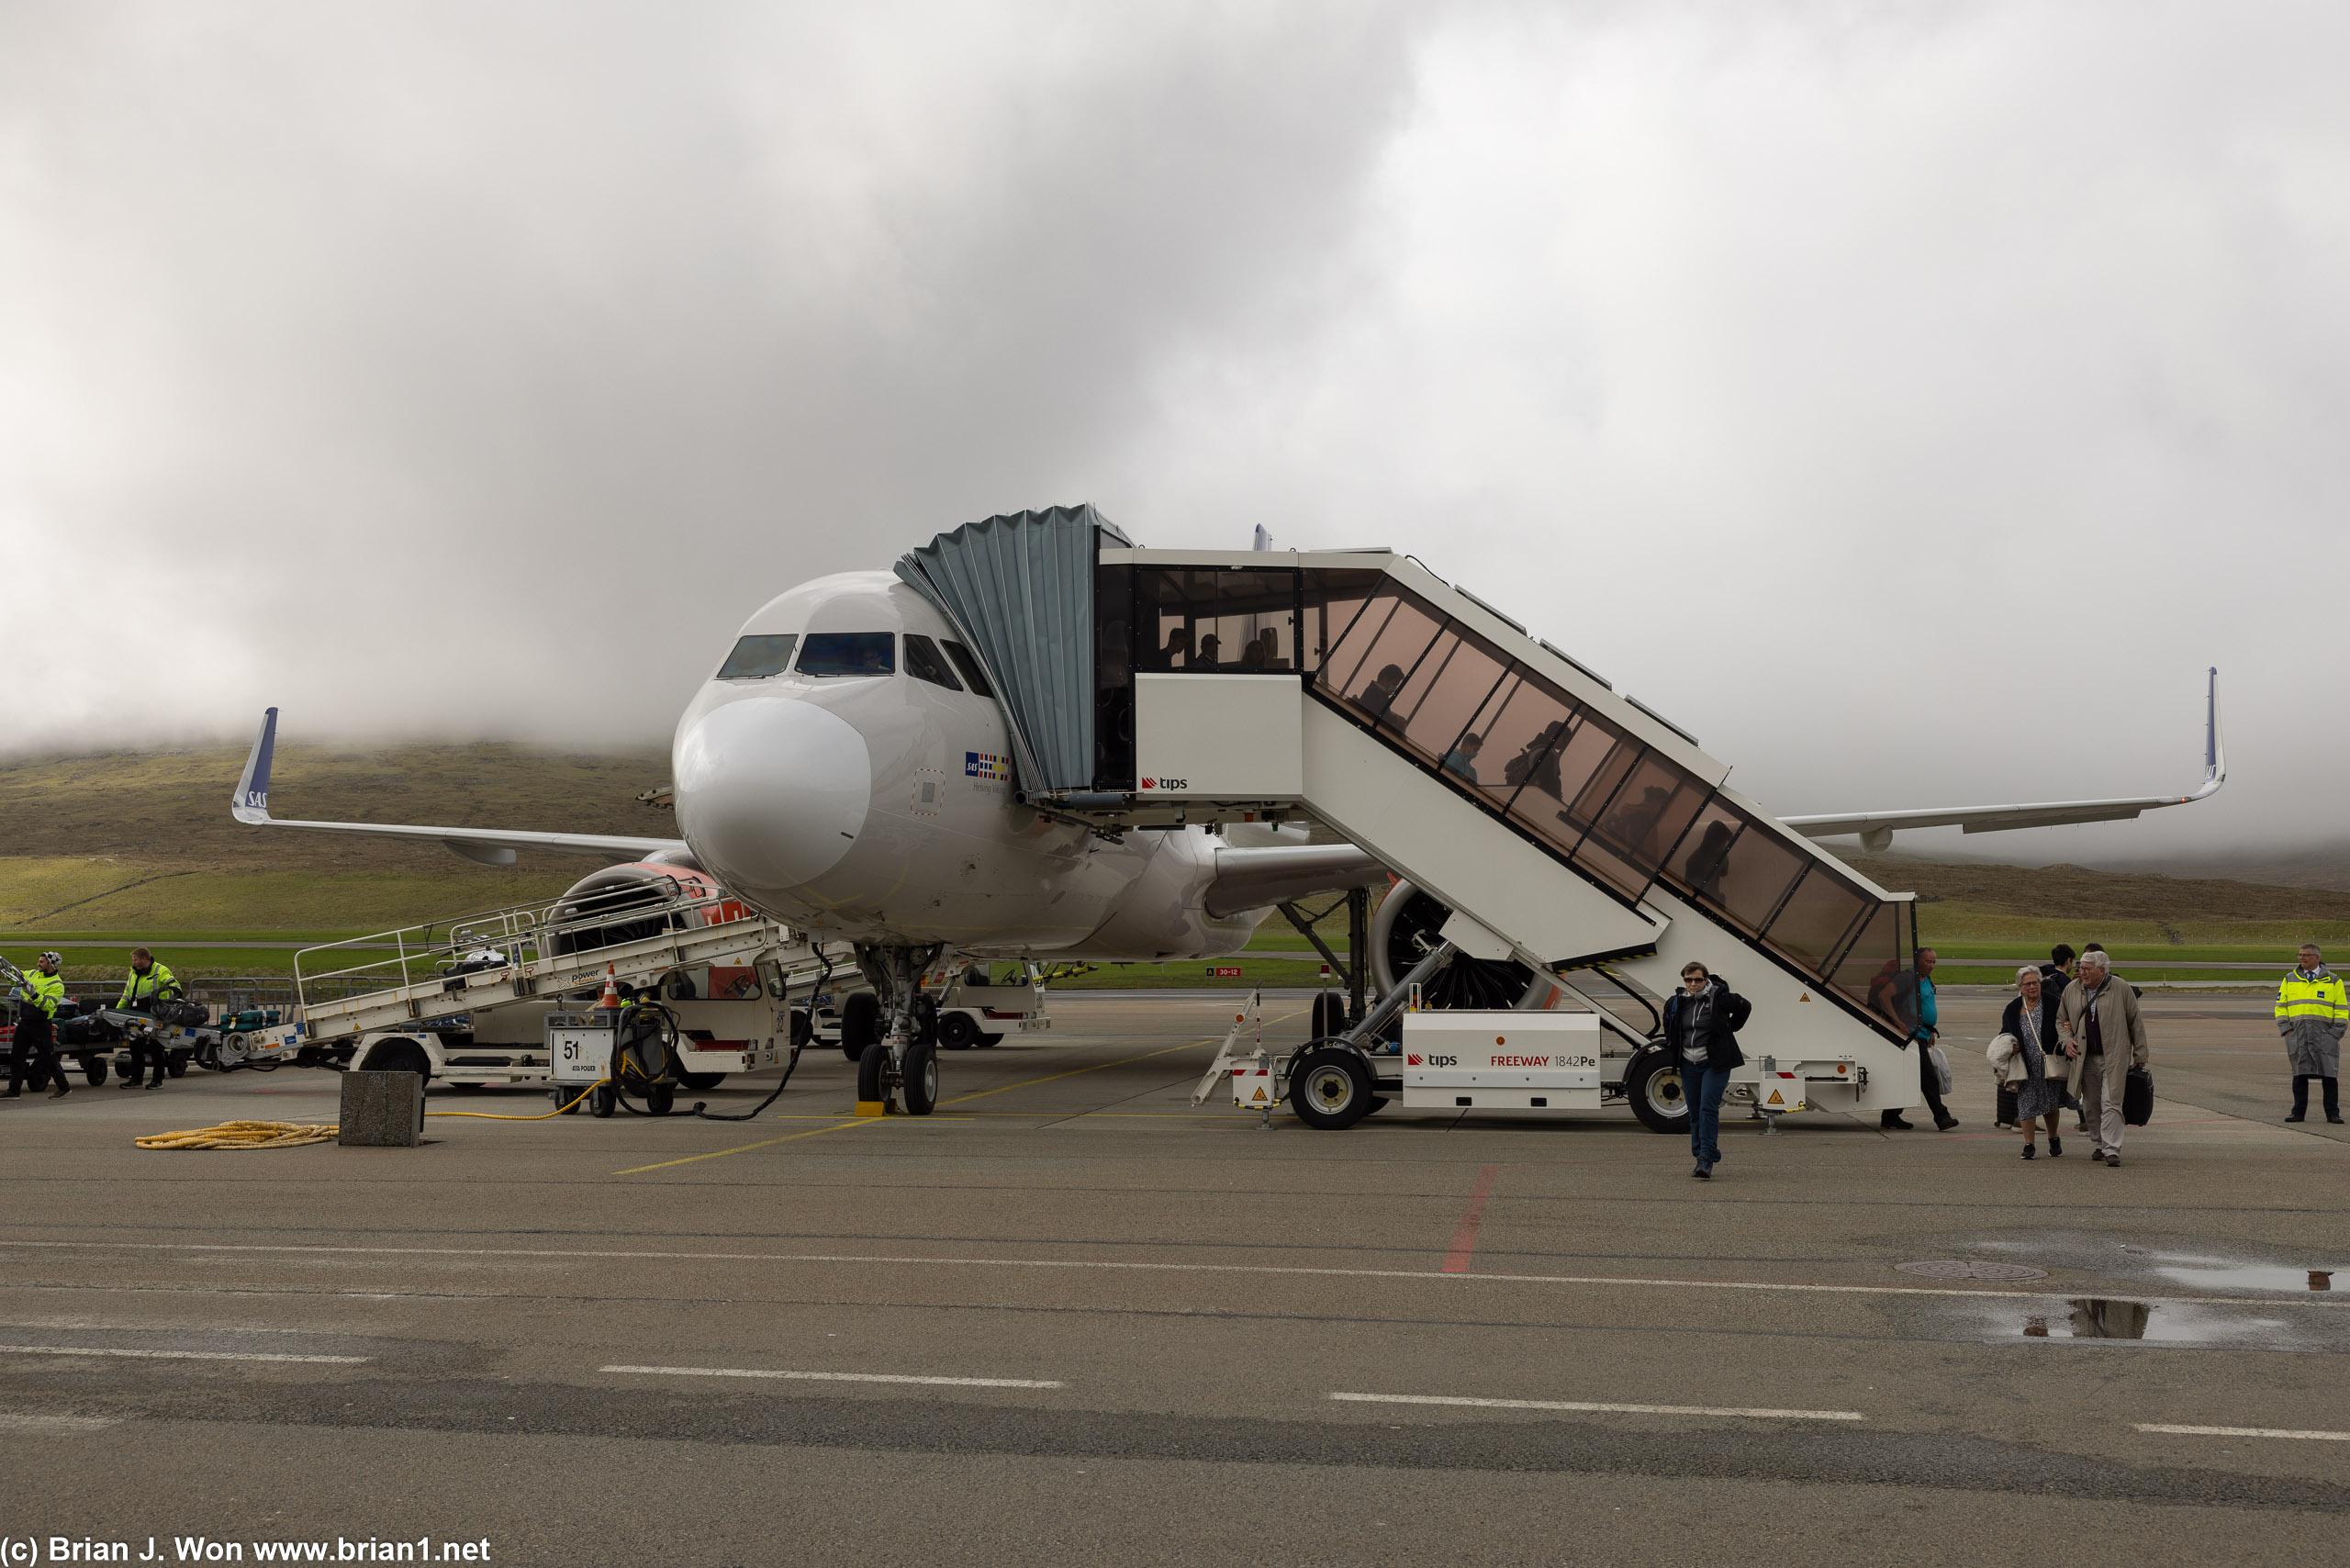 Arrival at Vagar Airport, Faroe Islands.